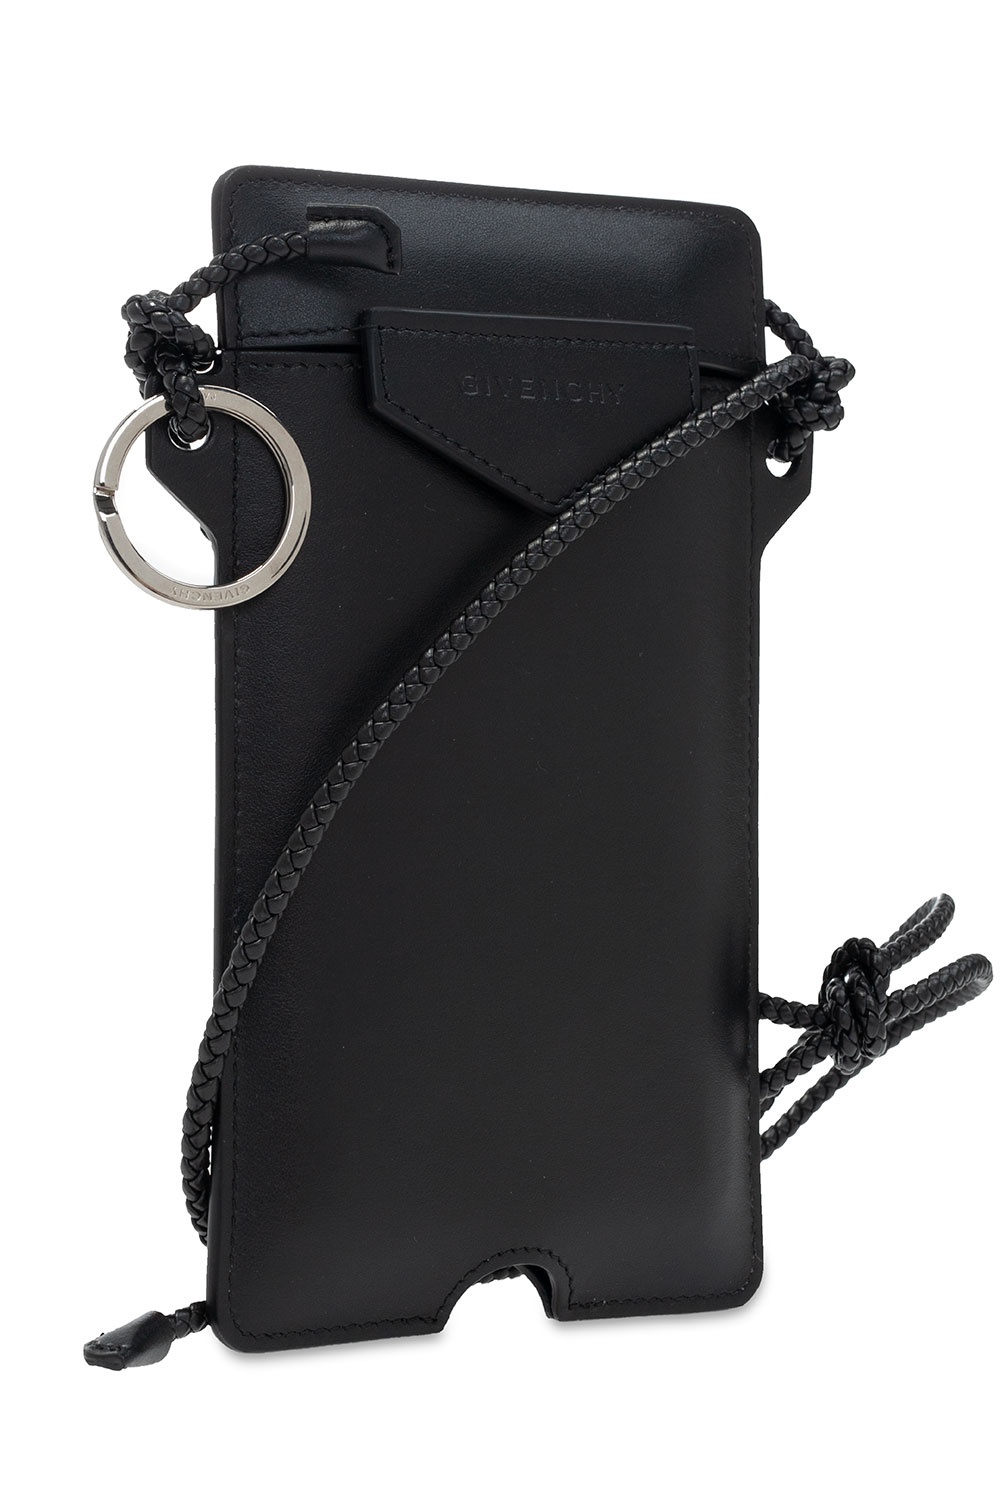 Givenchy Smartphone holder